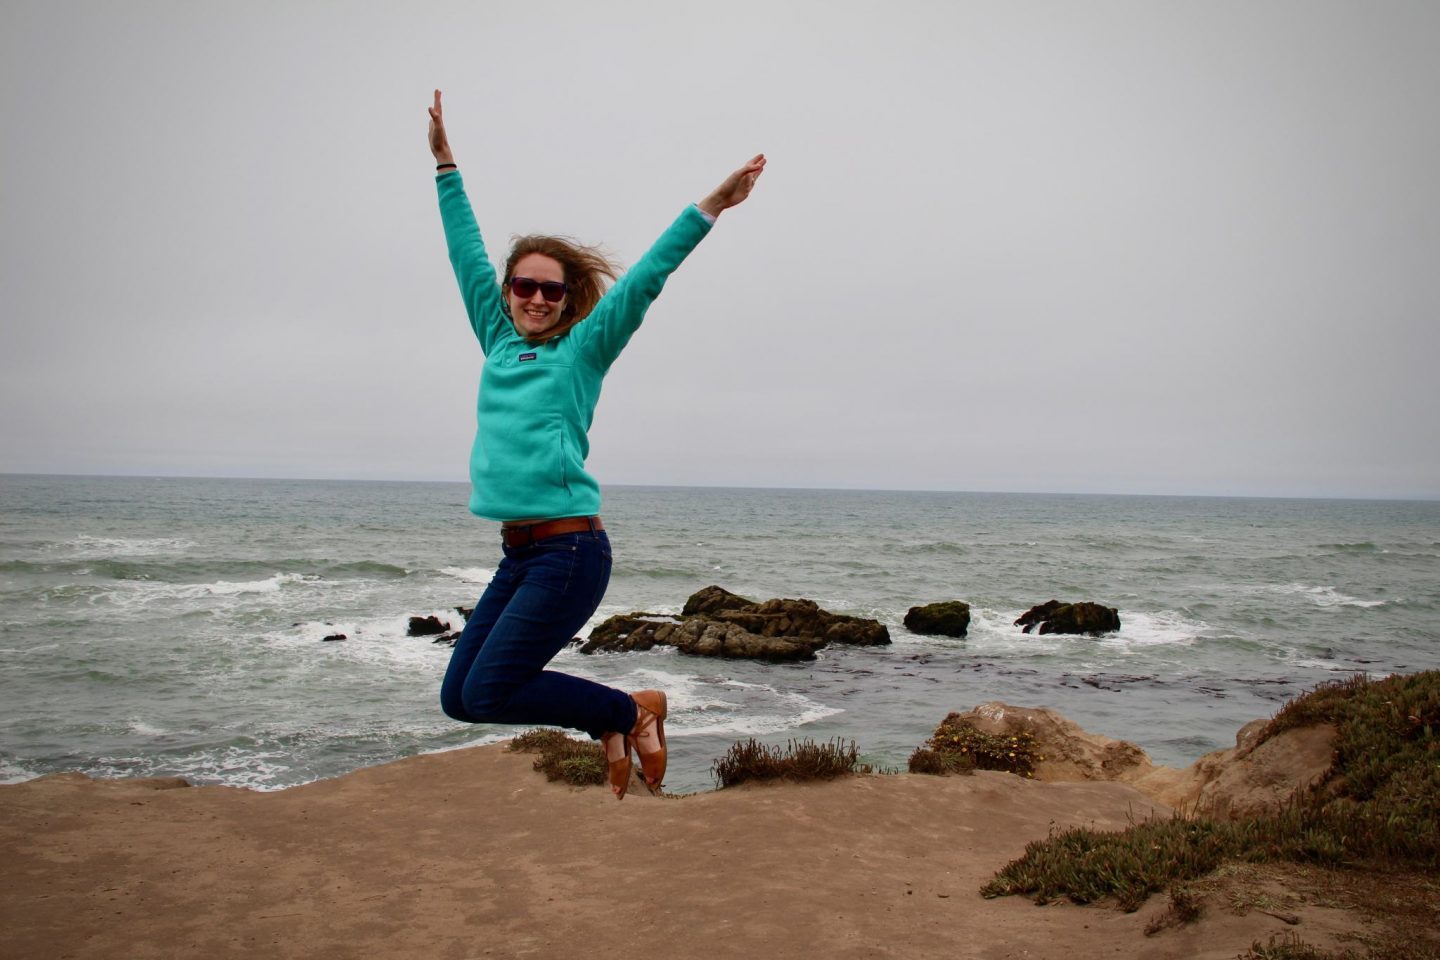 Jumping for joy along California's Highway 1 ... The Spectacular Adventurer